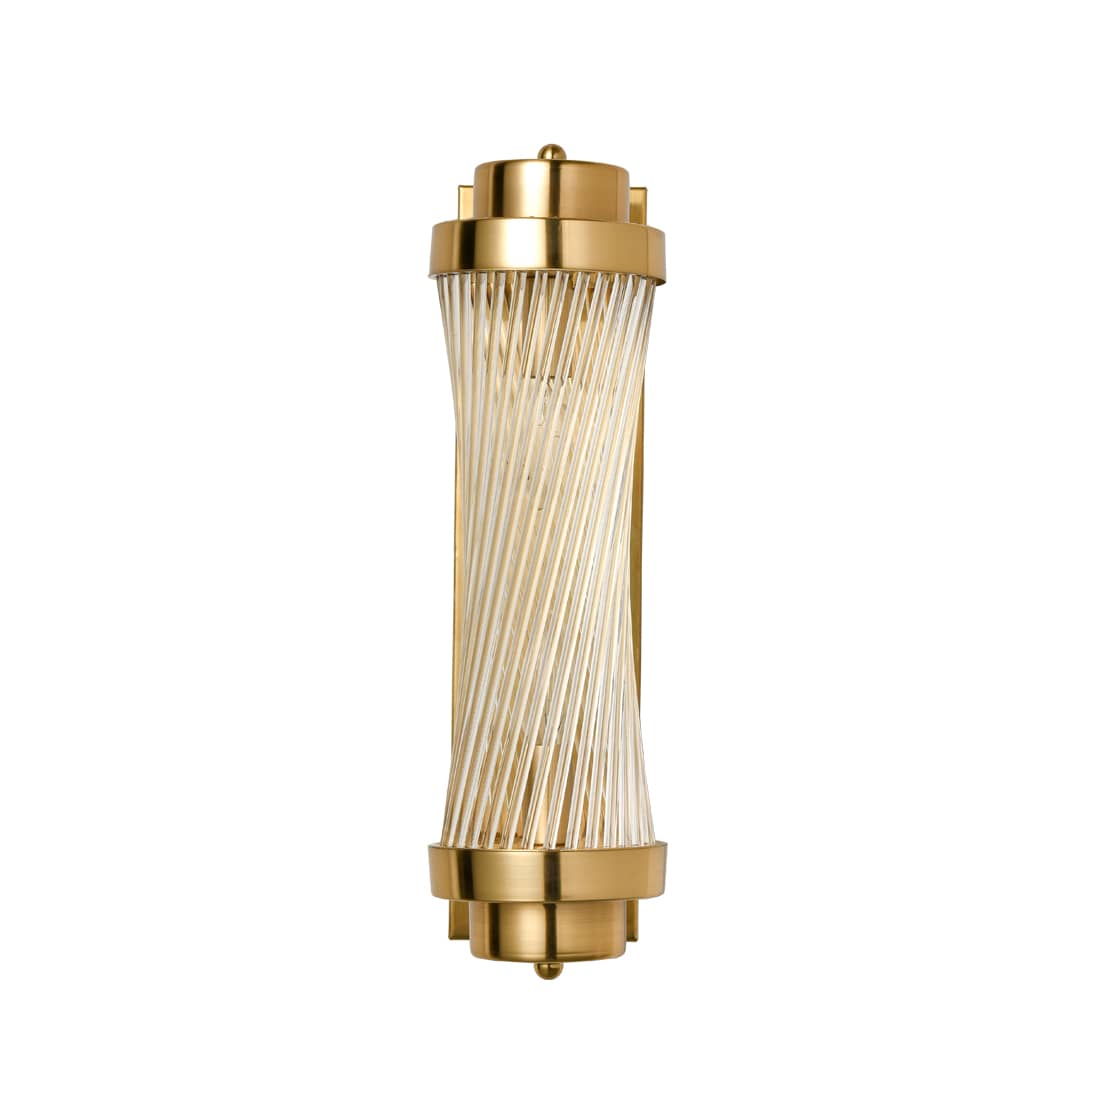 Modern Brass Wall Sconce 2-Light Bathroom Vanity Light